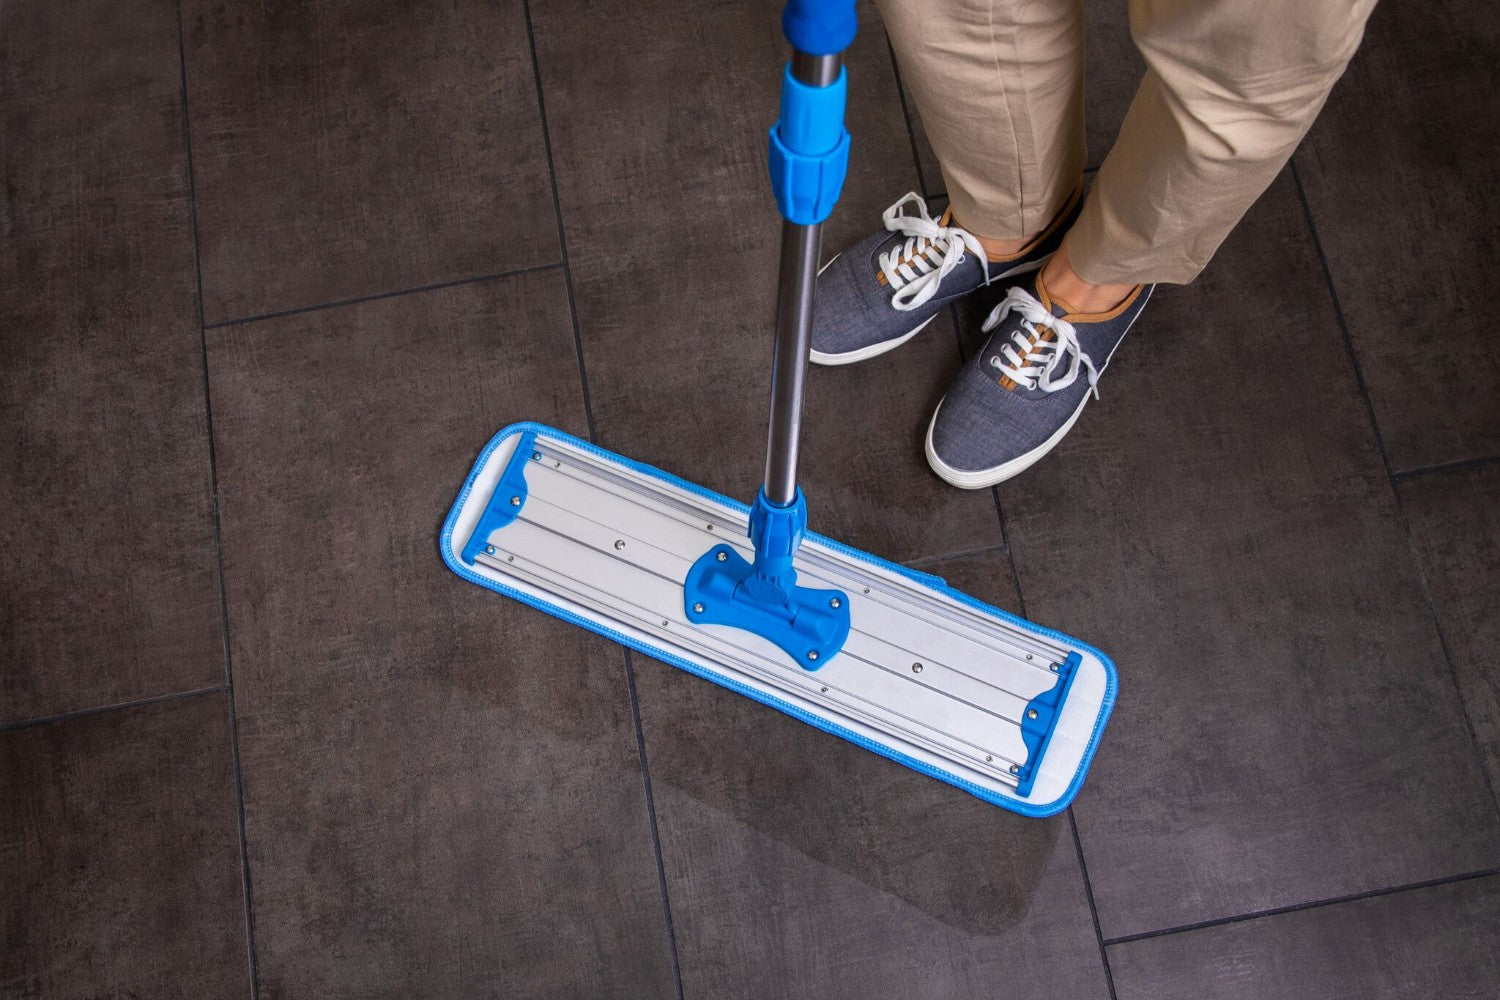 MWM20-microfiber mop covers tile floors